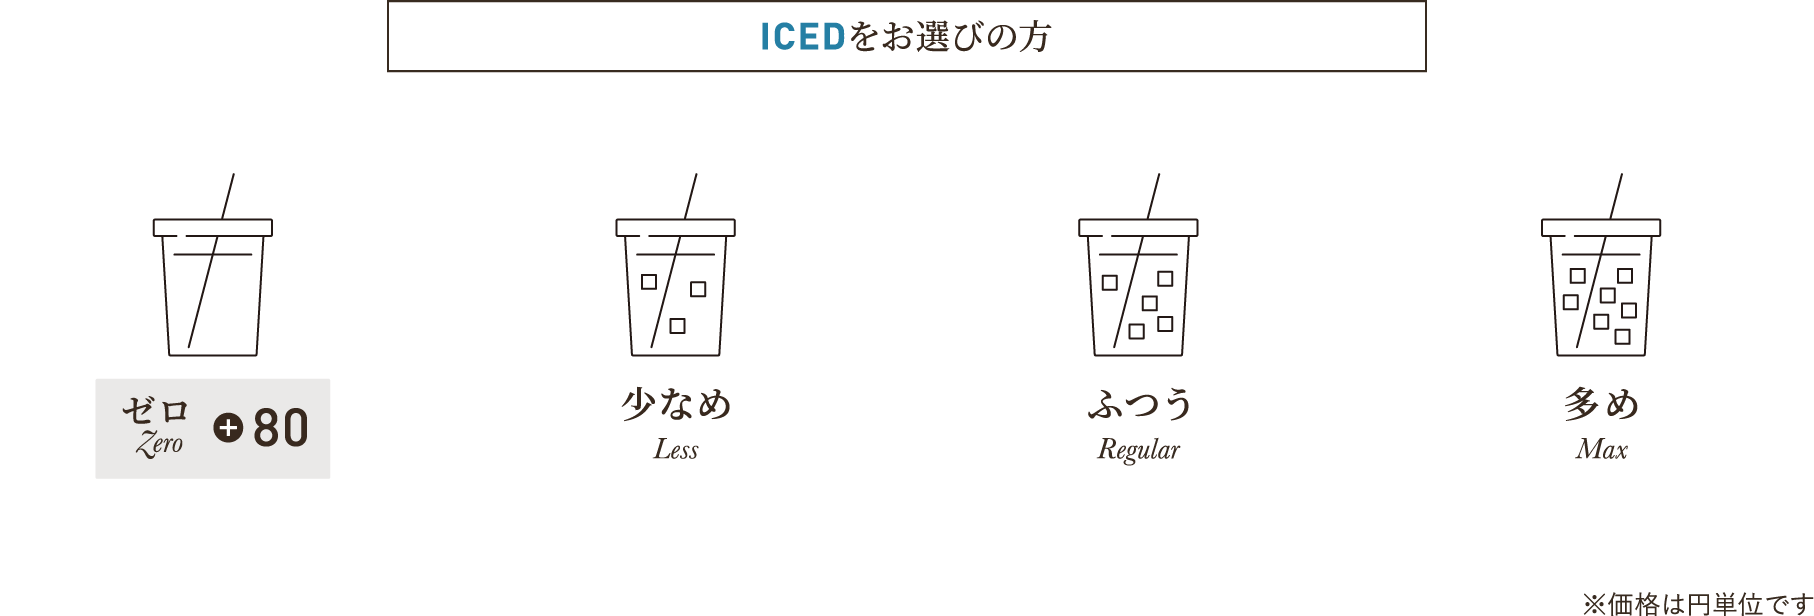 ICEDをお選びの方 氷あり with Ice 氷なし without Ice +80 ※価格は円単位です